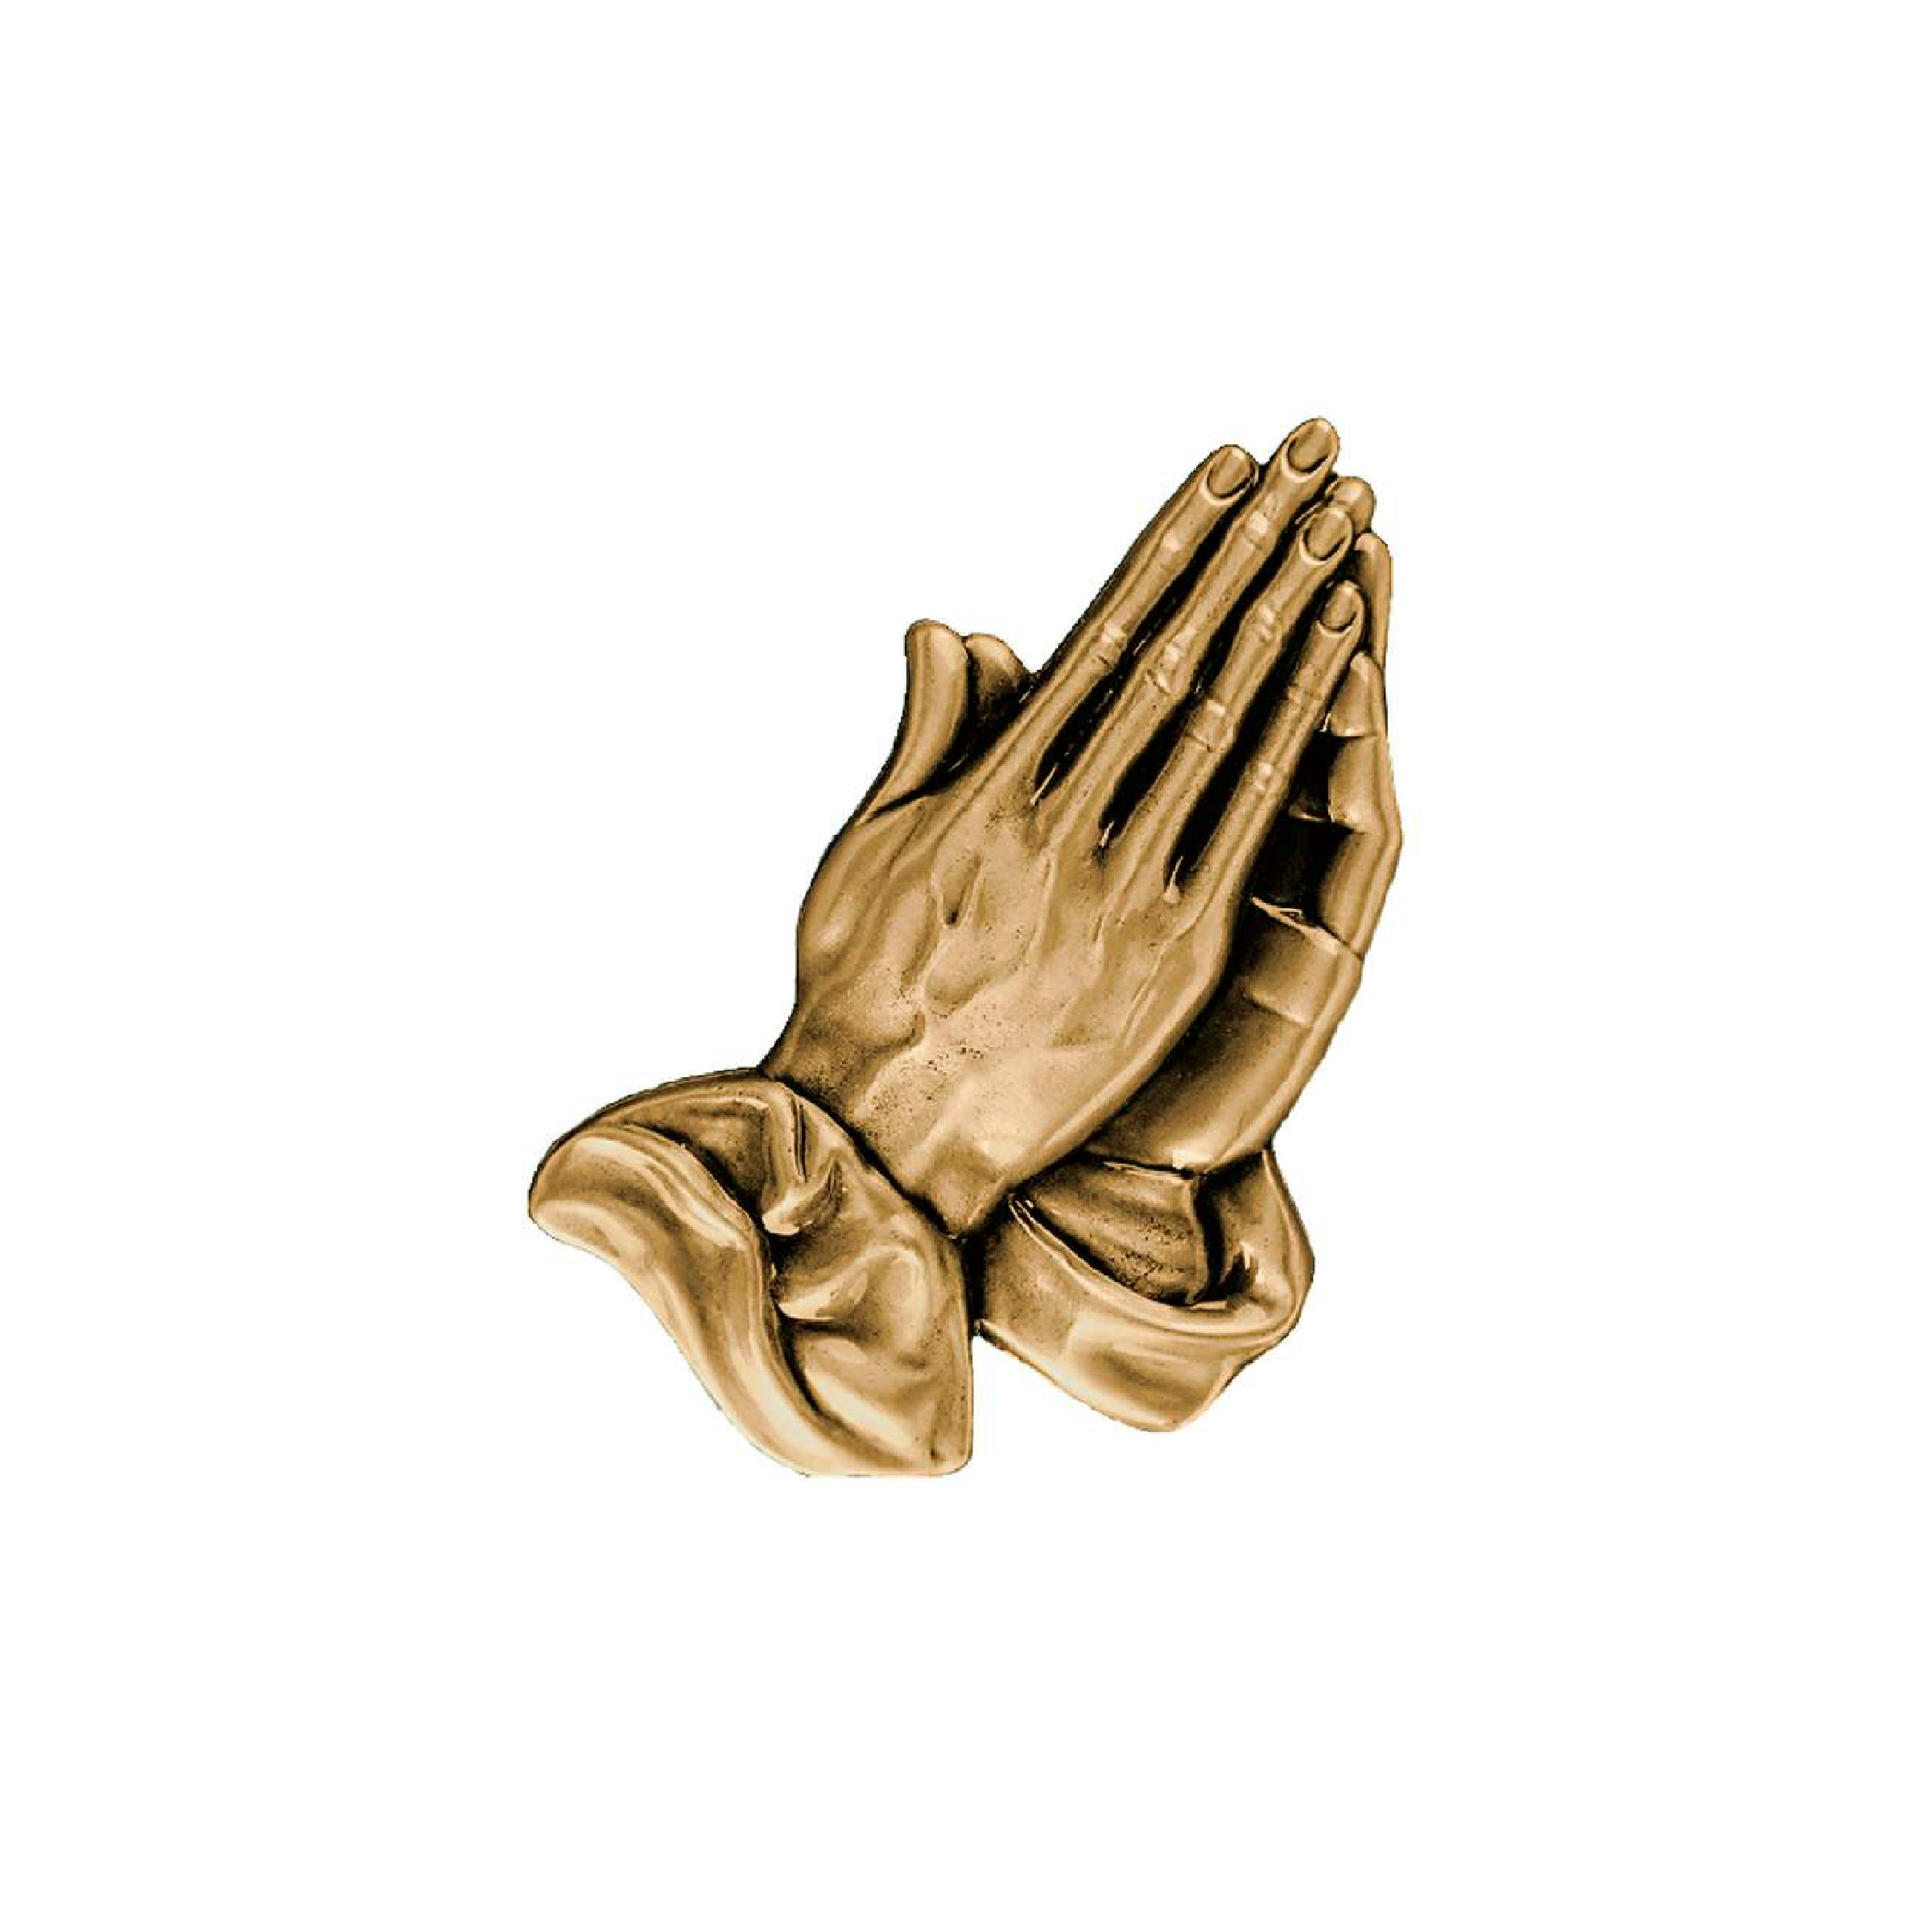 Praying Hands (facing right) 1.4″ x 1.9″